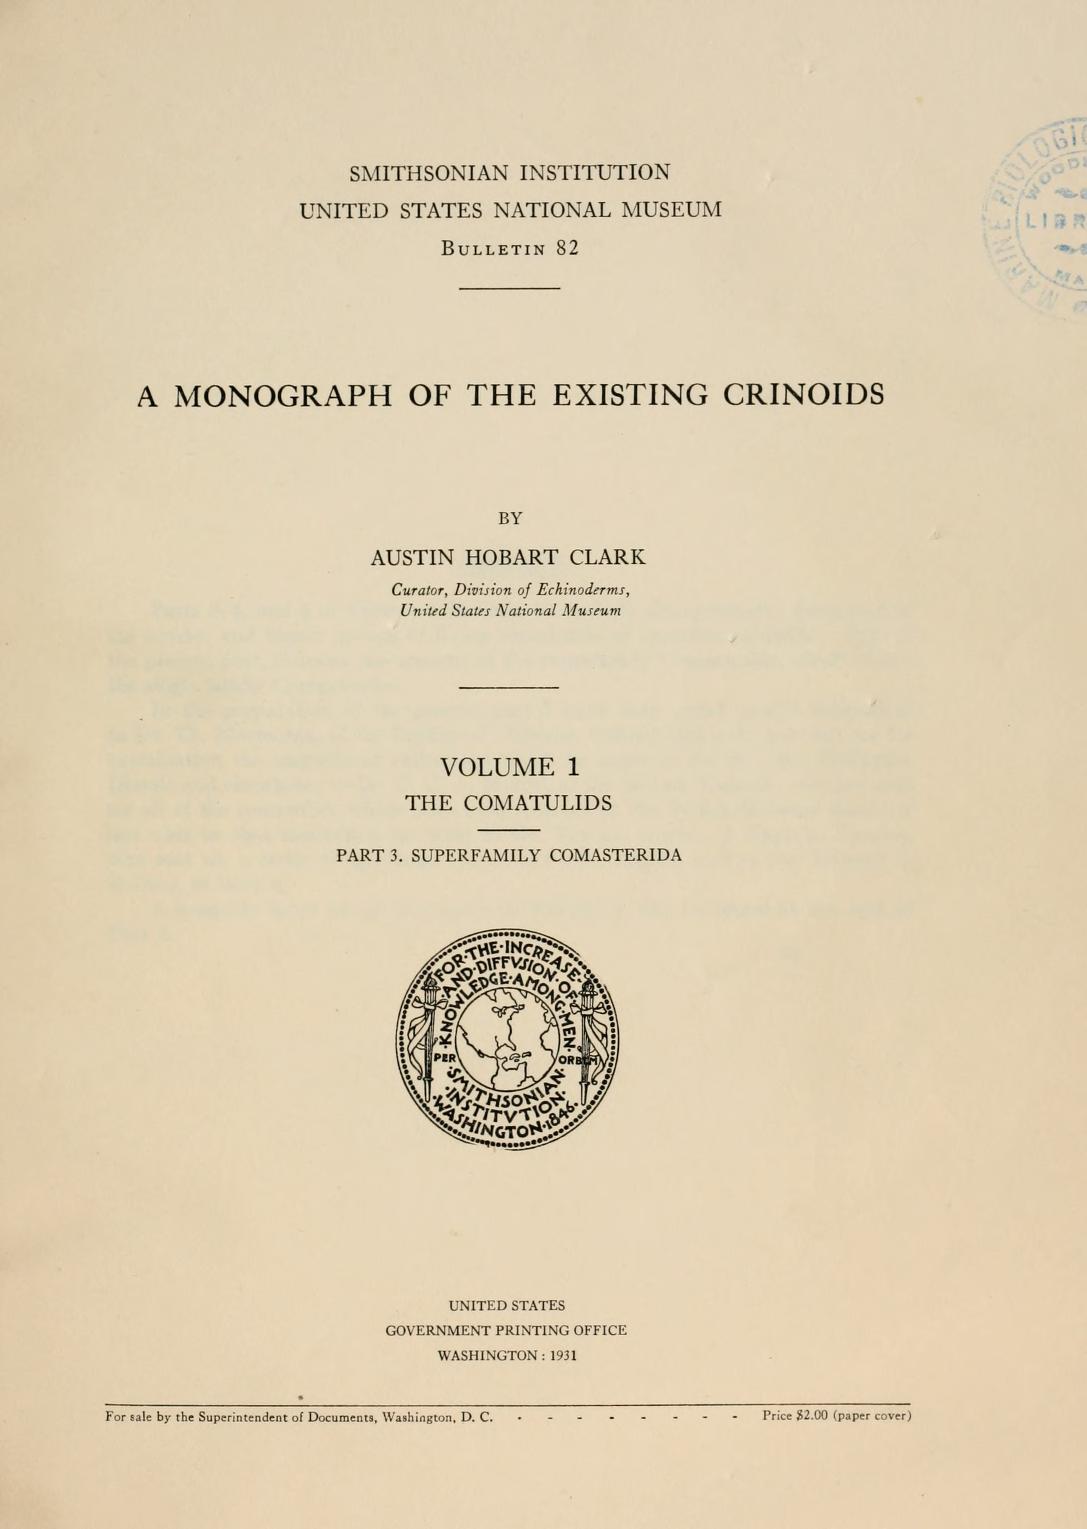 Media type: text; Clark 1931 Description: A Monograph of the Existing Crinoids 1931;